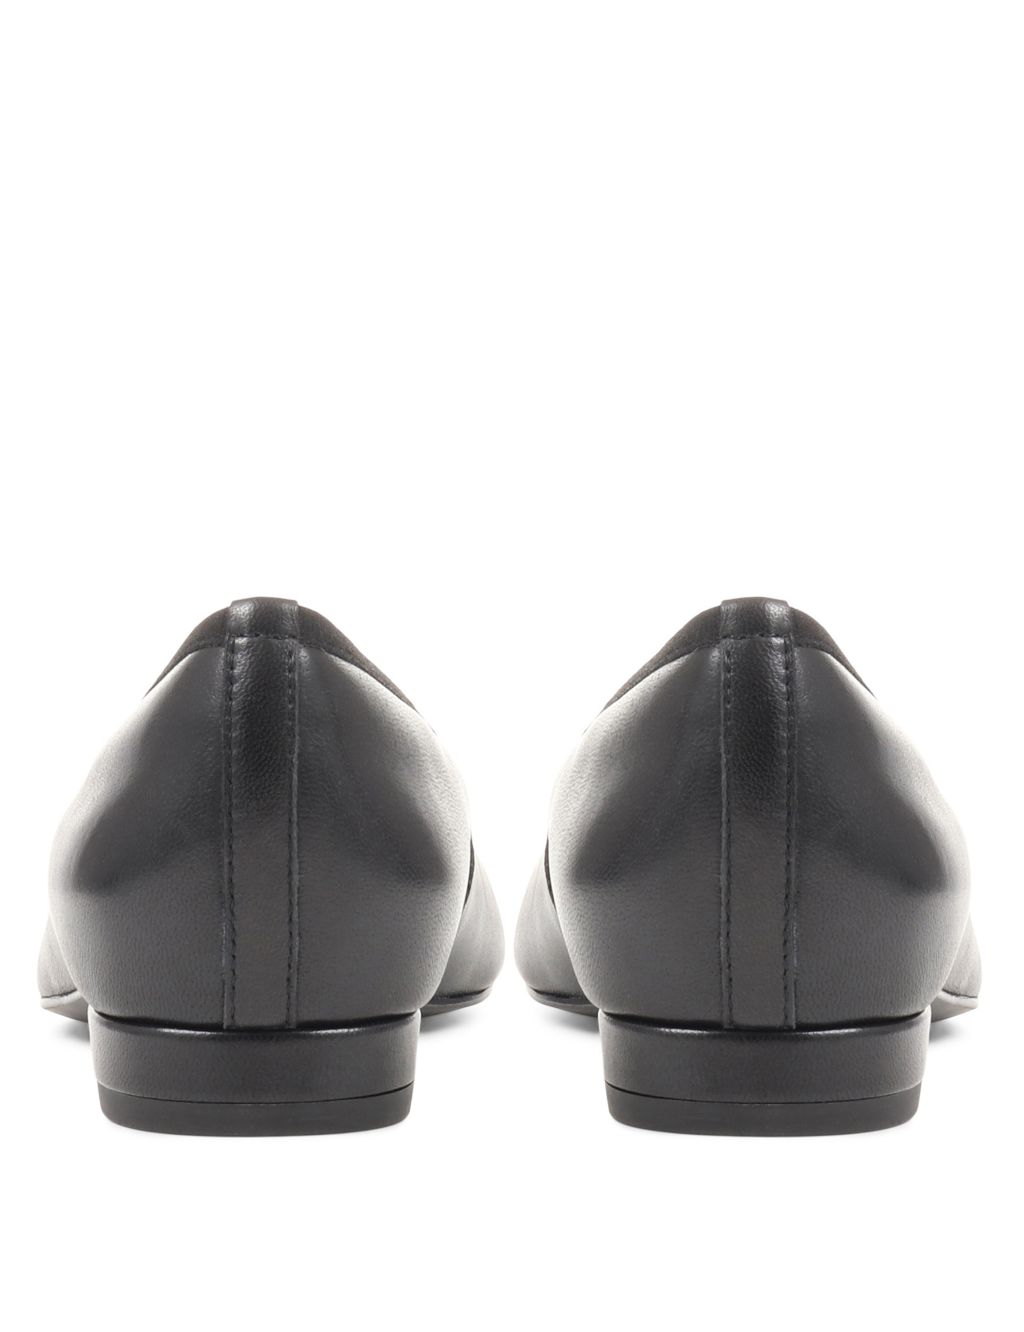 Leather Flat Ballet Pumps | Jones Bootmaker | M&S